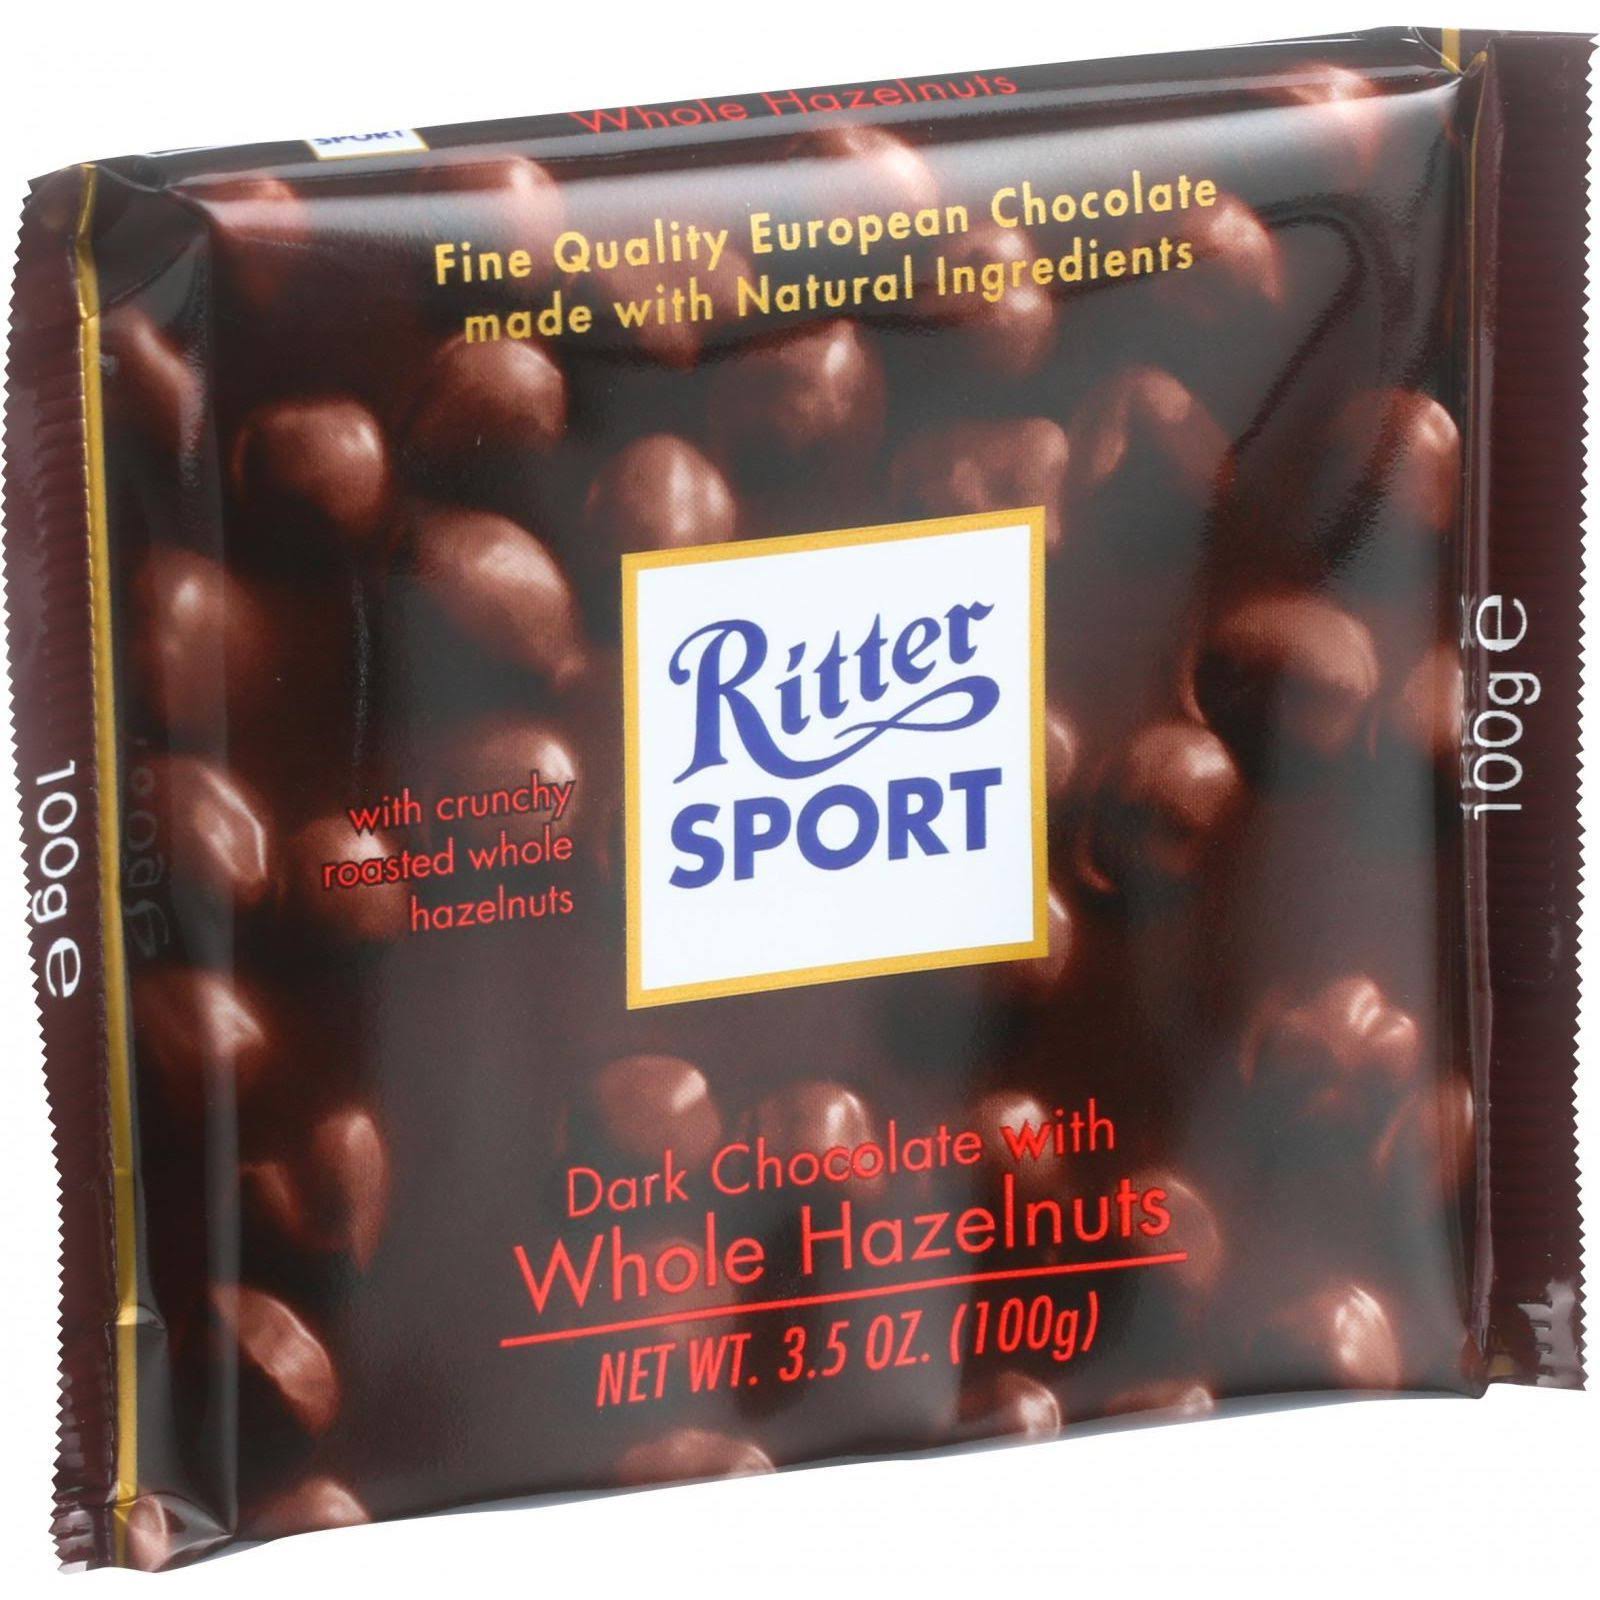 Ritter Sport - Dark Chocolate With Whole Hazelnuts, 100g